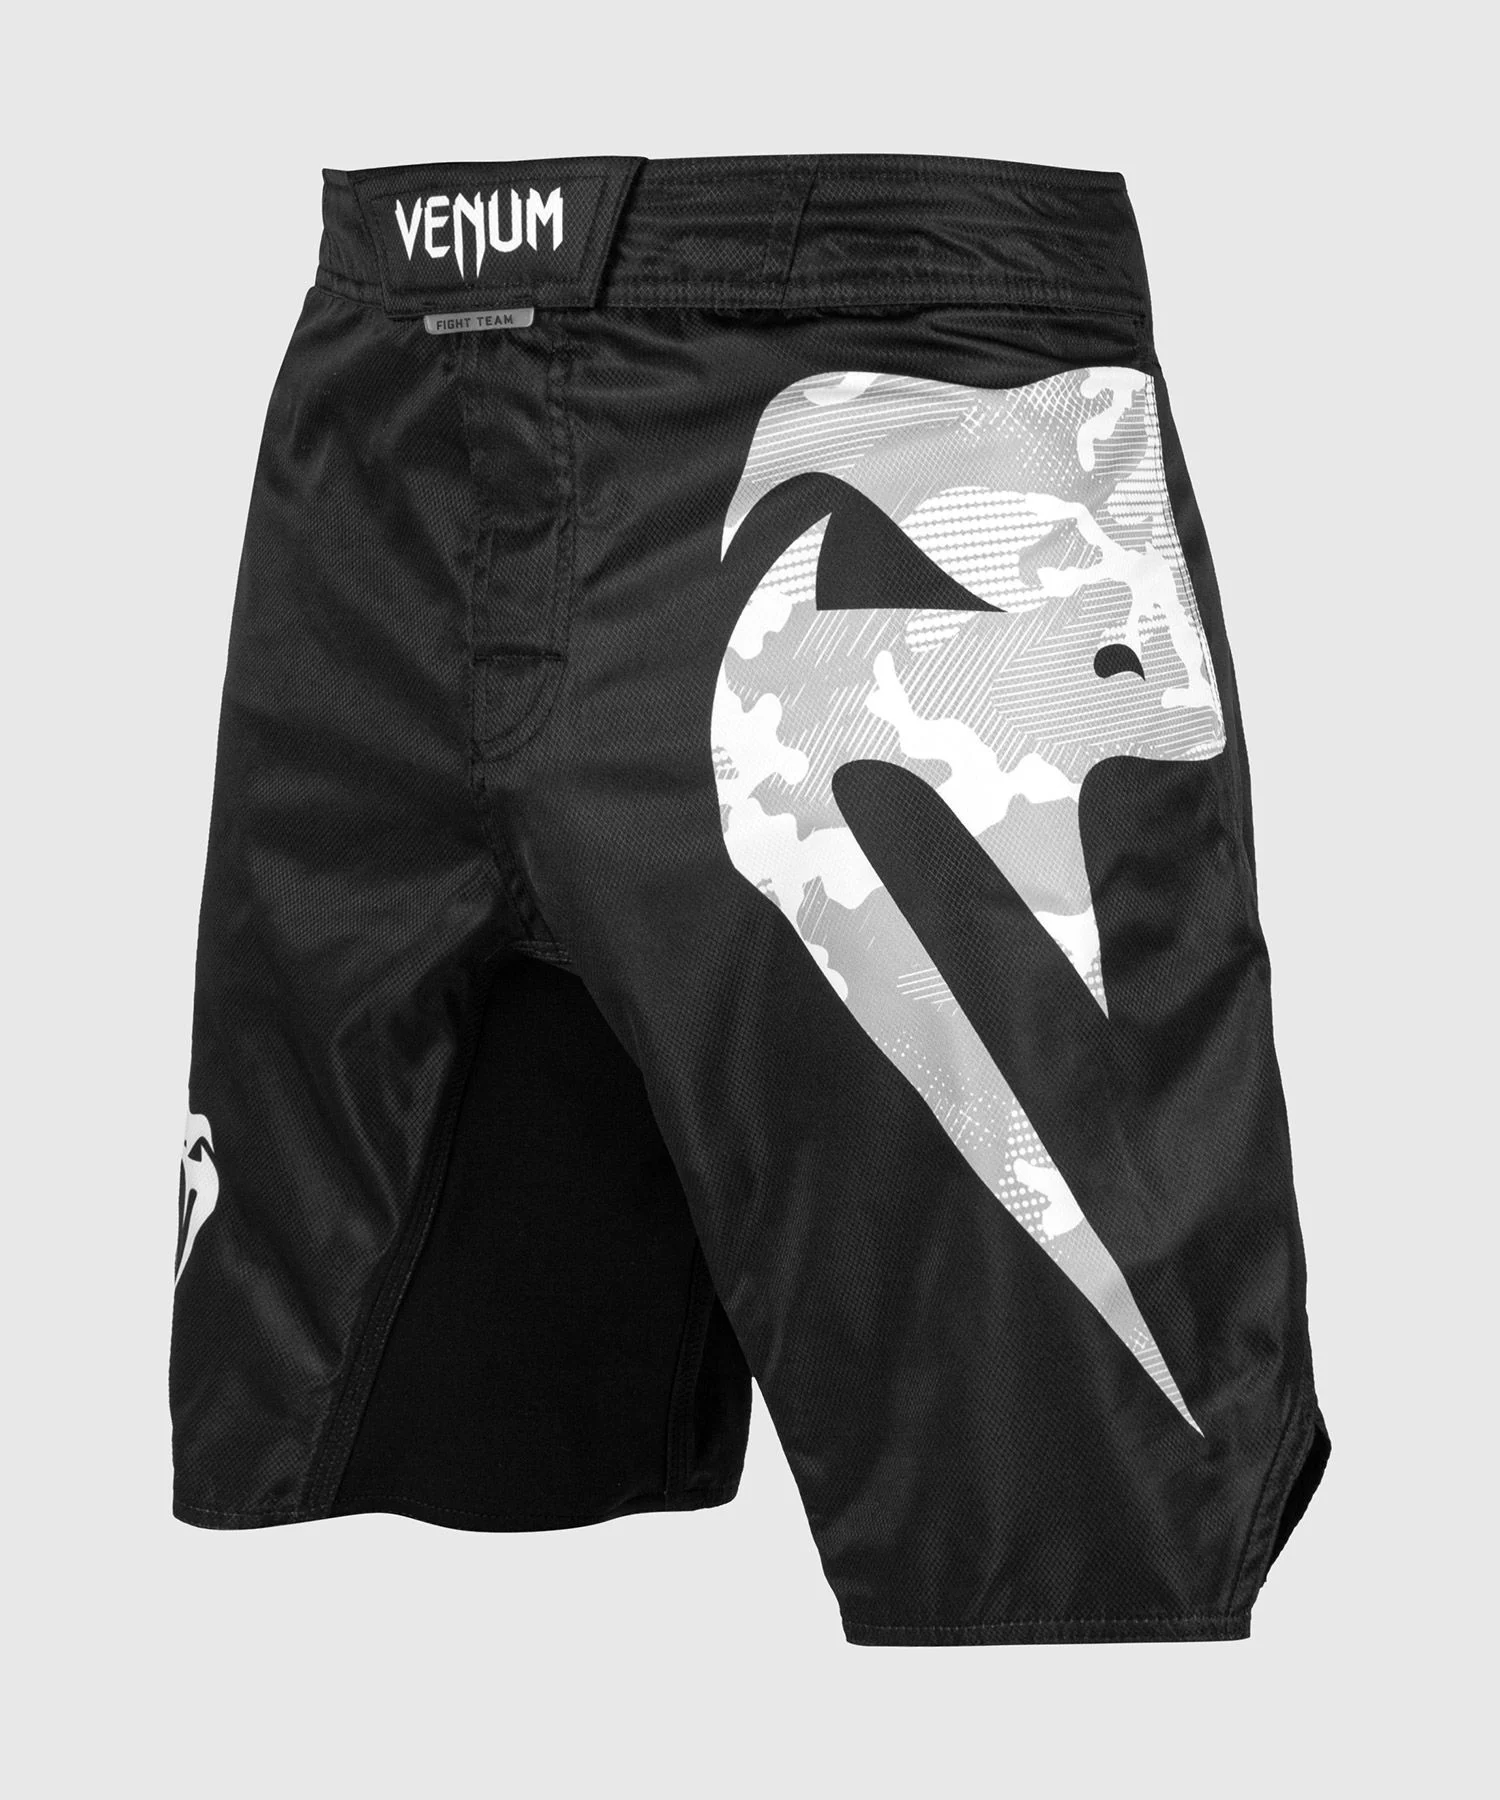 Venum Light 3.0 Fightshorts (Black/White Camo)